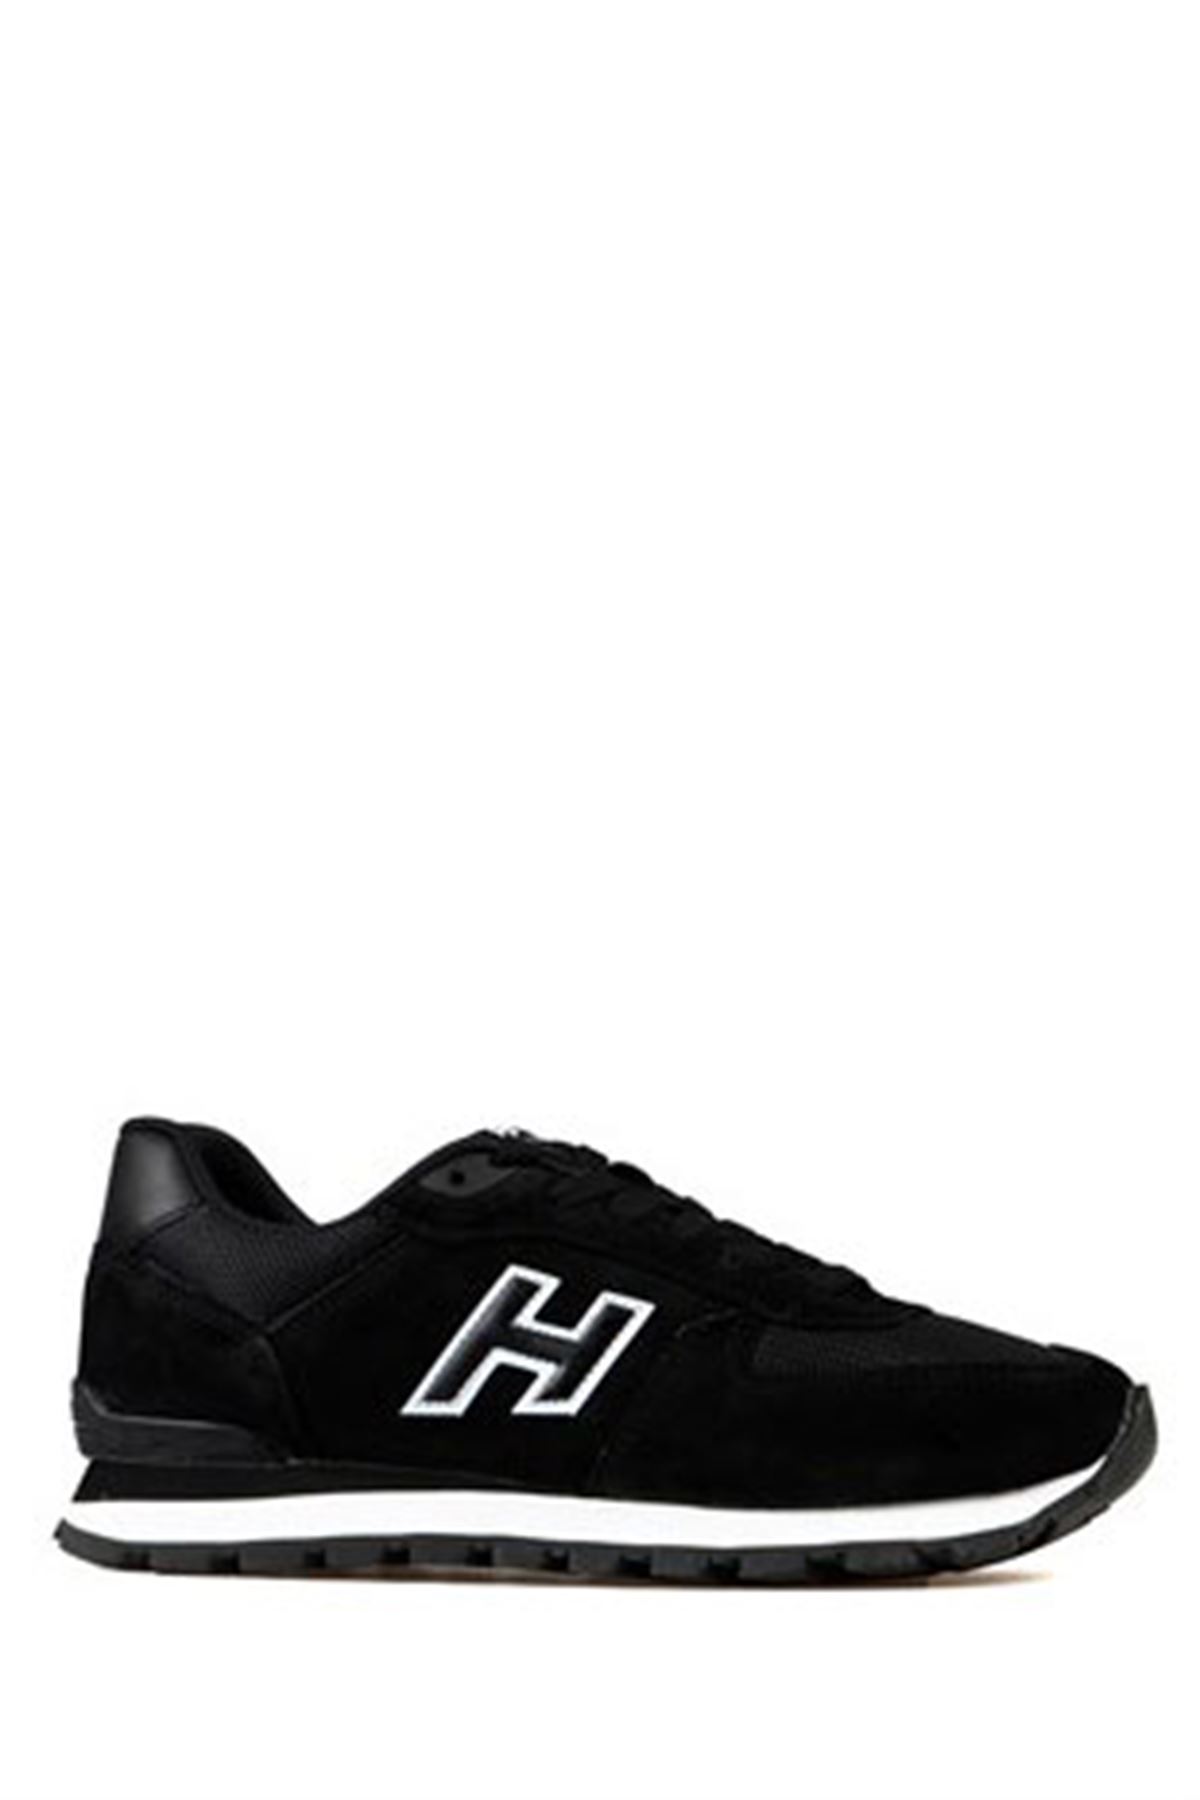 Hammer Jack Peru Erkek Spor Ayakkabı - Siyah